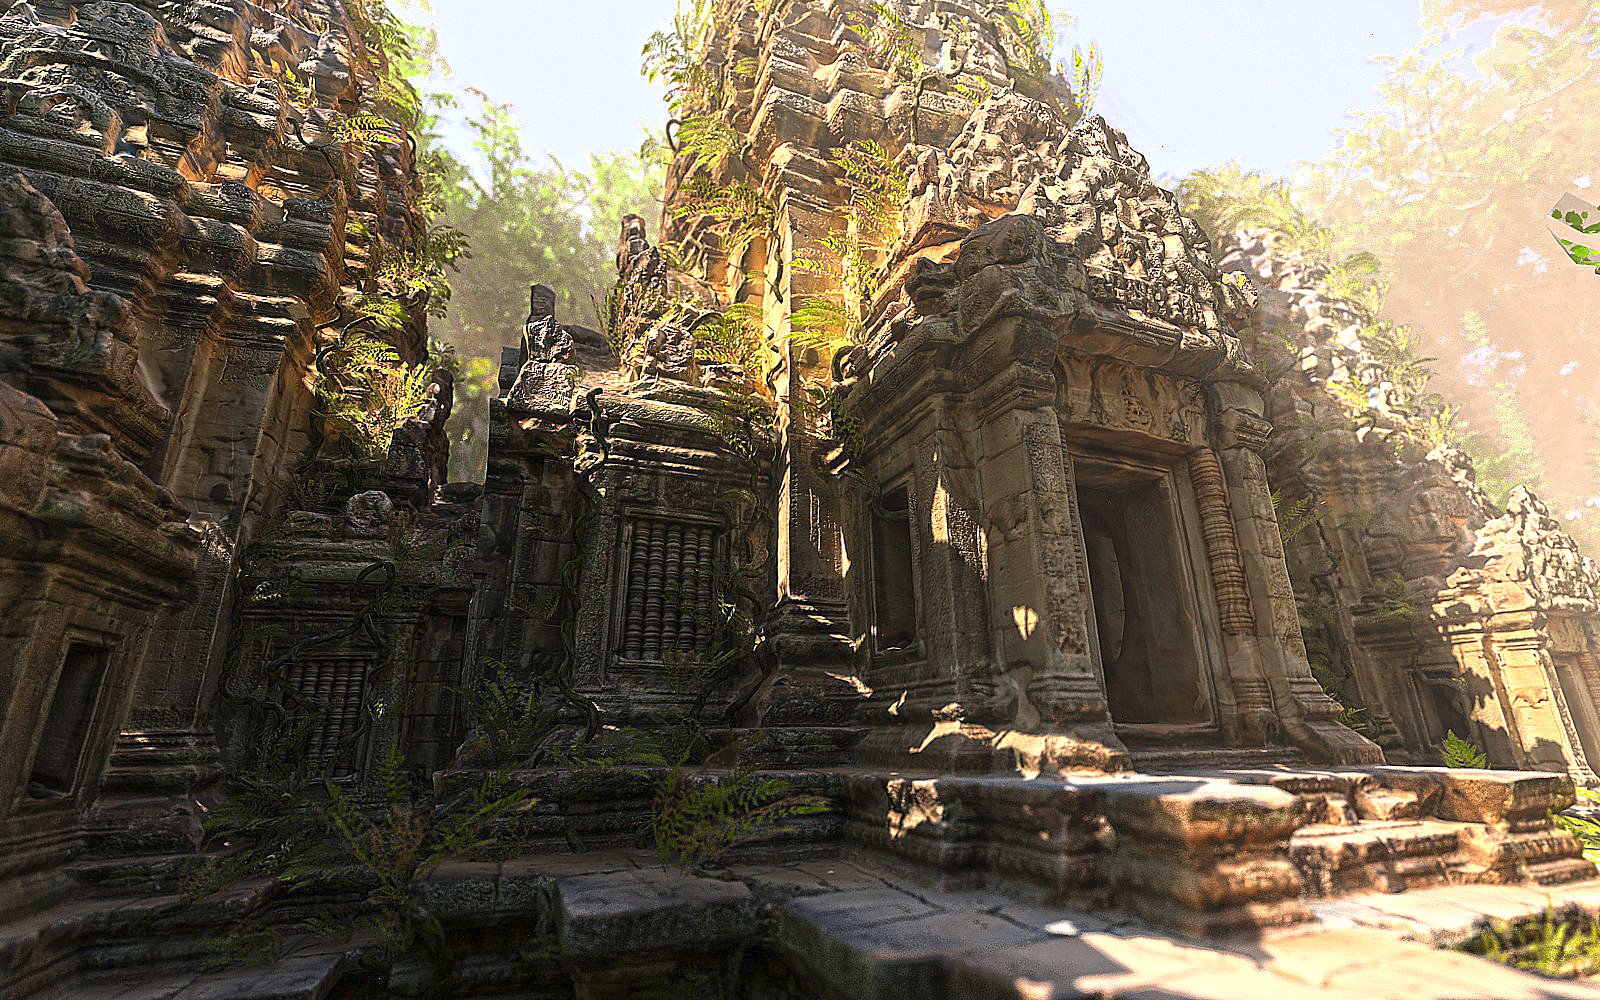 Lost temple. Храм та Прум Камбоджа изнутри. Джунглевский храм. Лост Темпл. Храм в джунглях.